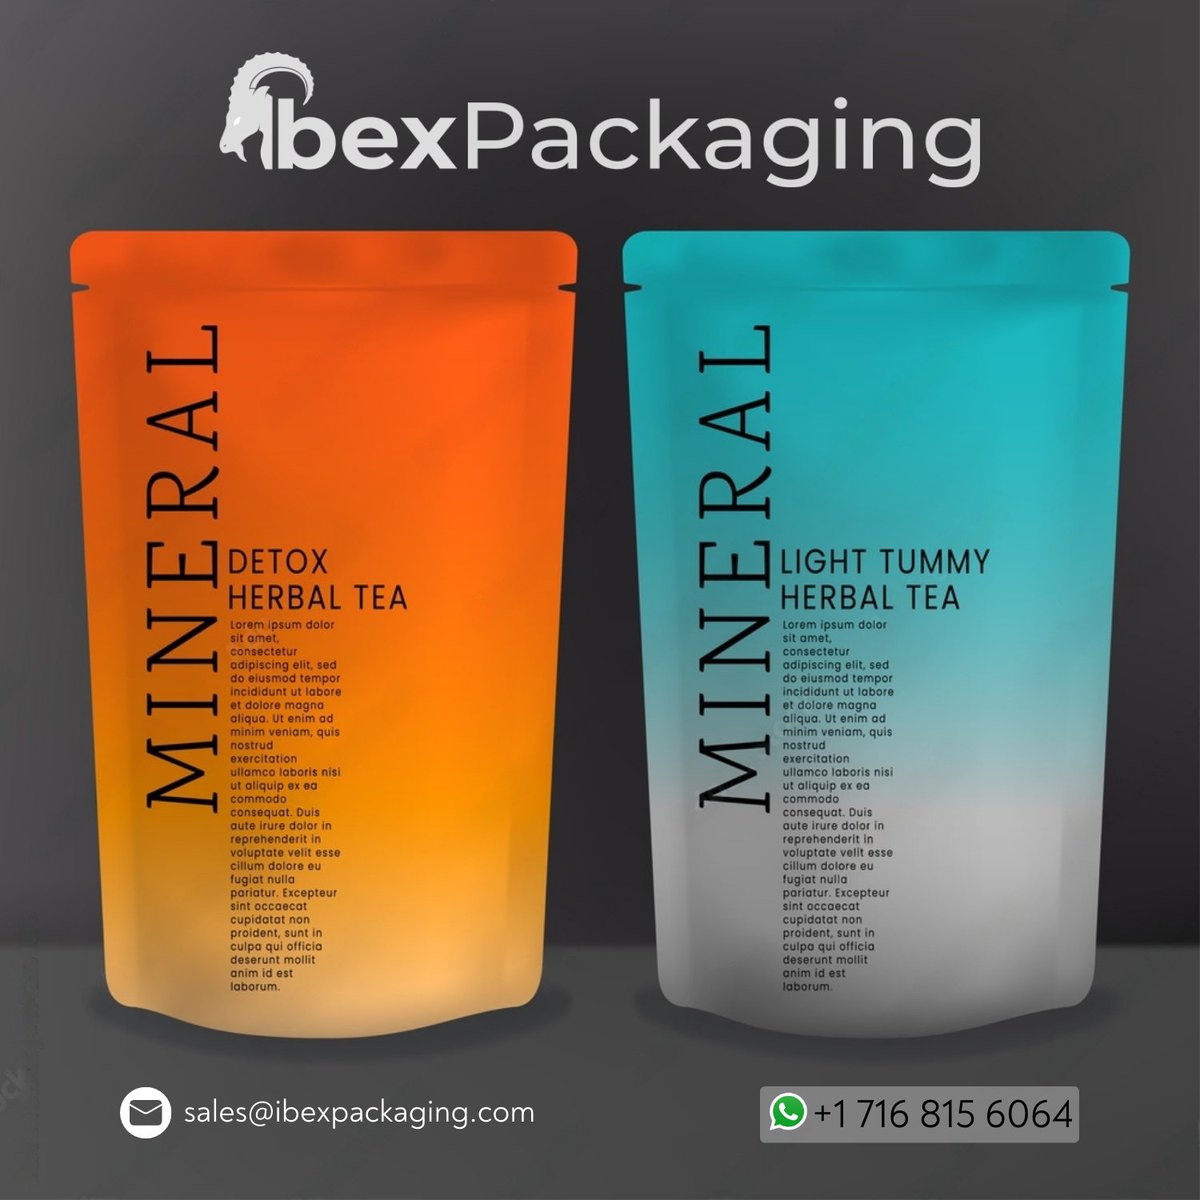 Introducing our premium Mylar packaging bags! 🌟  buff.ly/3tG7pJb

#IBEXPackaging #CustomMylarBags #mylarbags #MylarPackaging #PackagingBags #FreshnessPreservation #ResealableBags #ProductProtection #PremiumQuality #FoodPackaging #SnackPackaging #CoffeePackaging